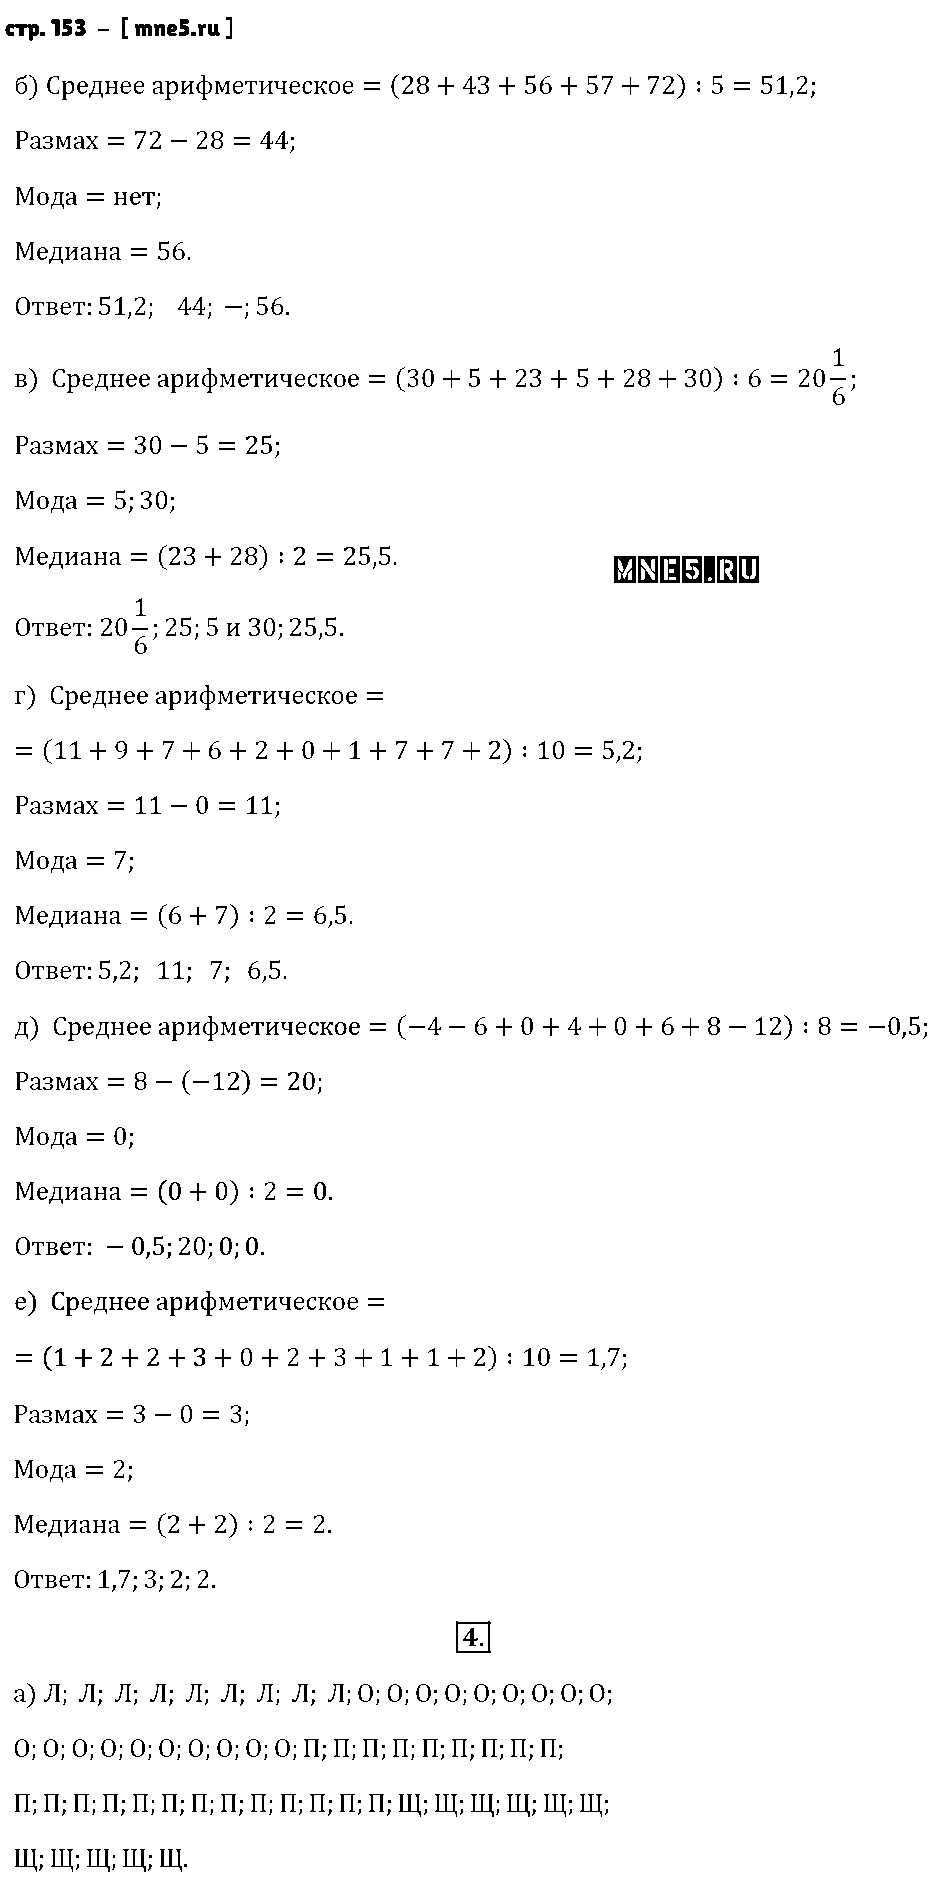 ГДЗ Алгебра 8 класс - стр. 153